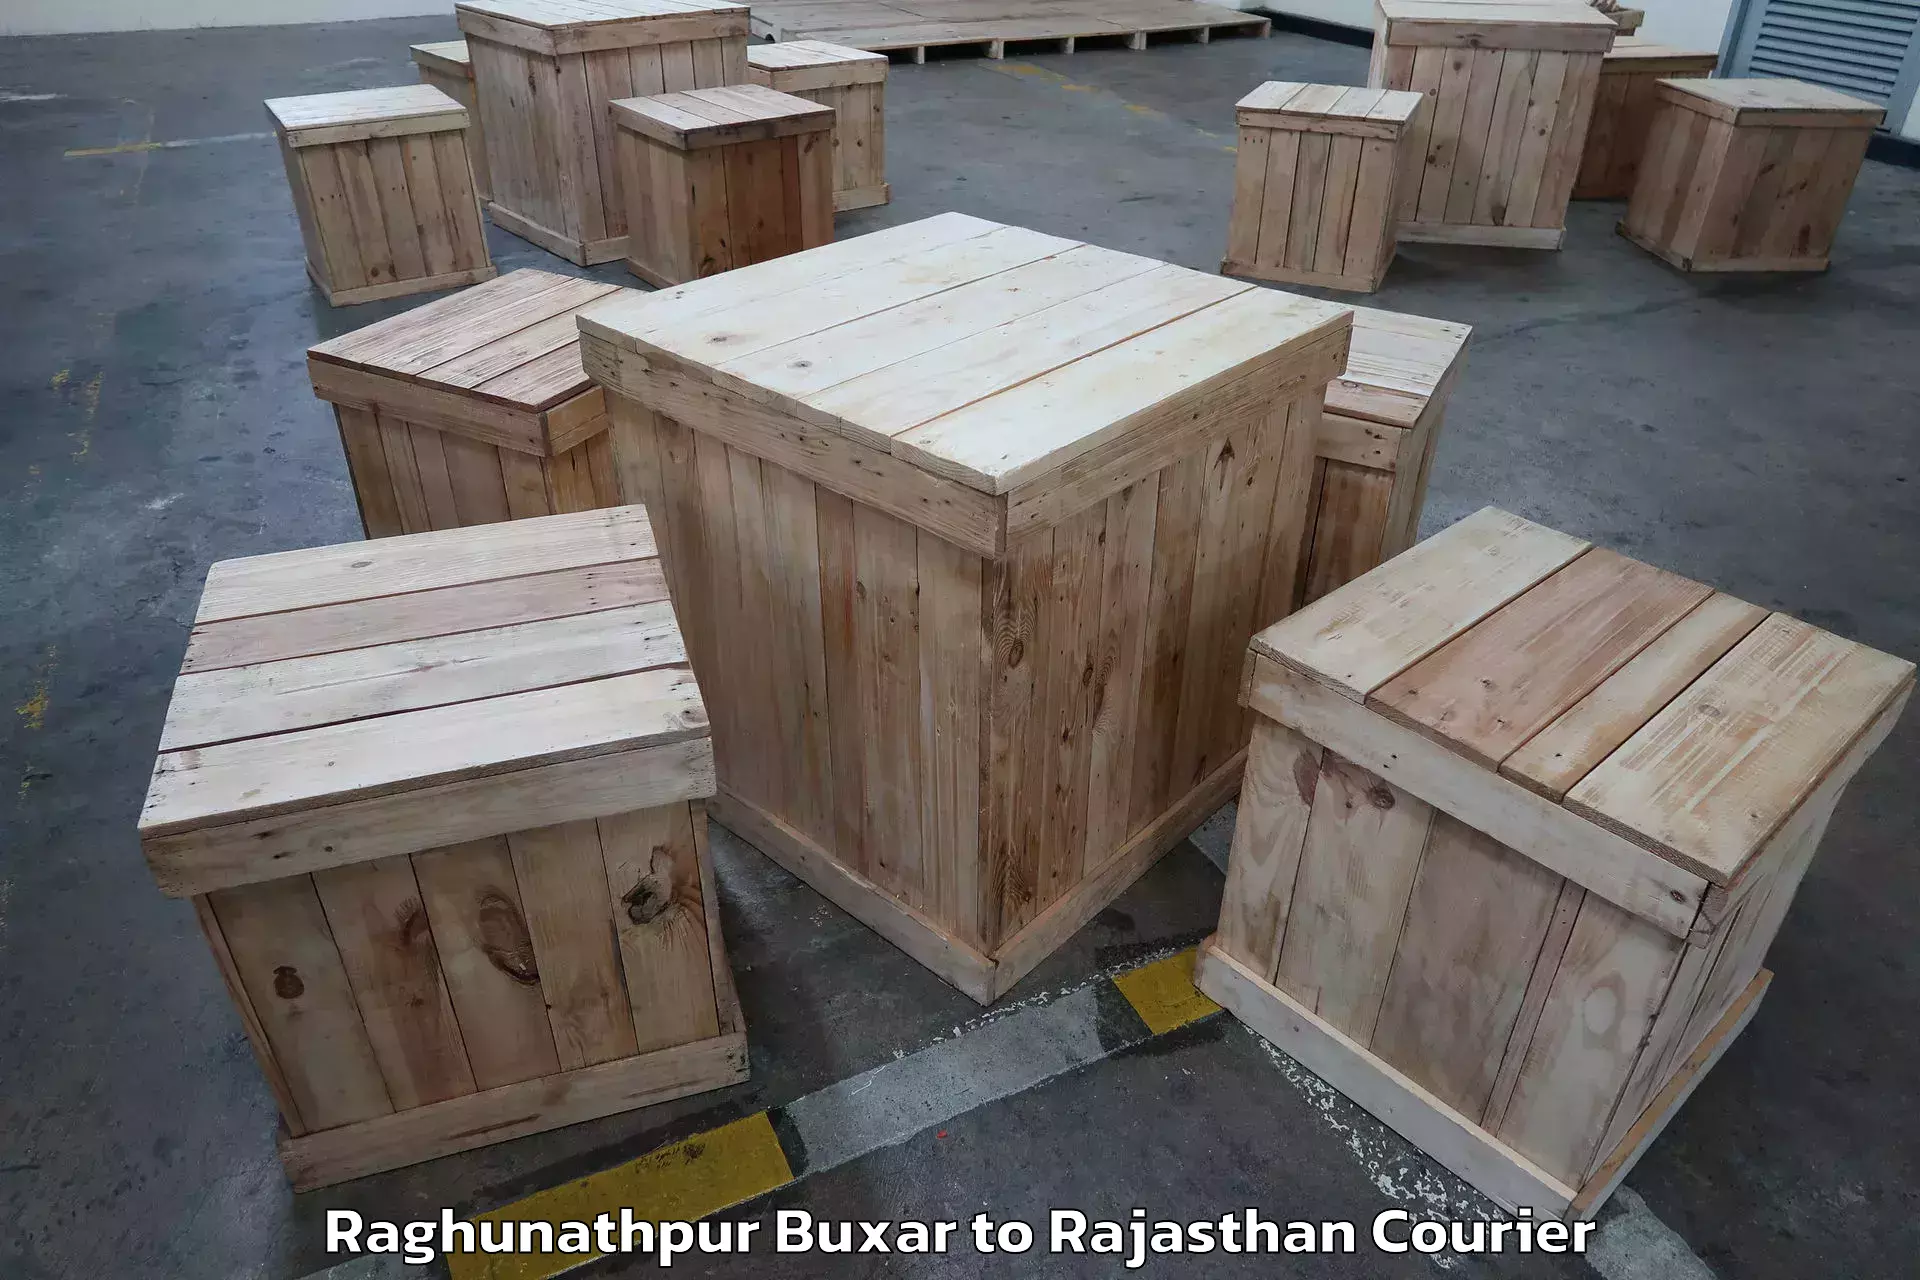 Full-service movers Raghunathpur Buxar to Rajasthan